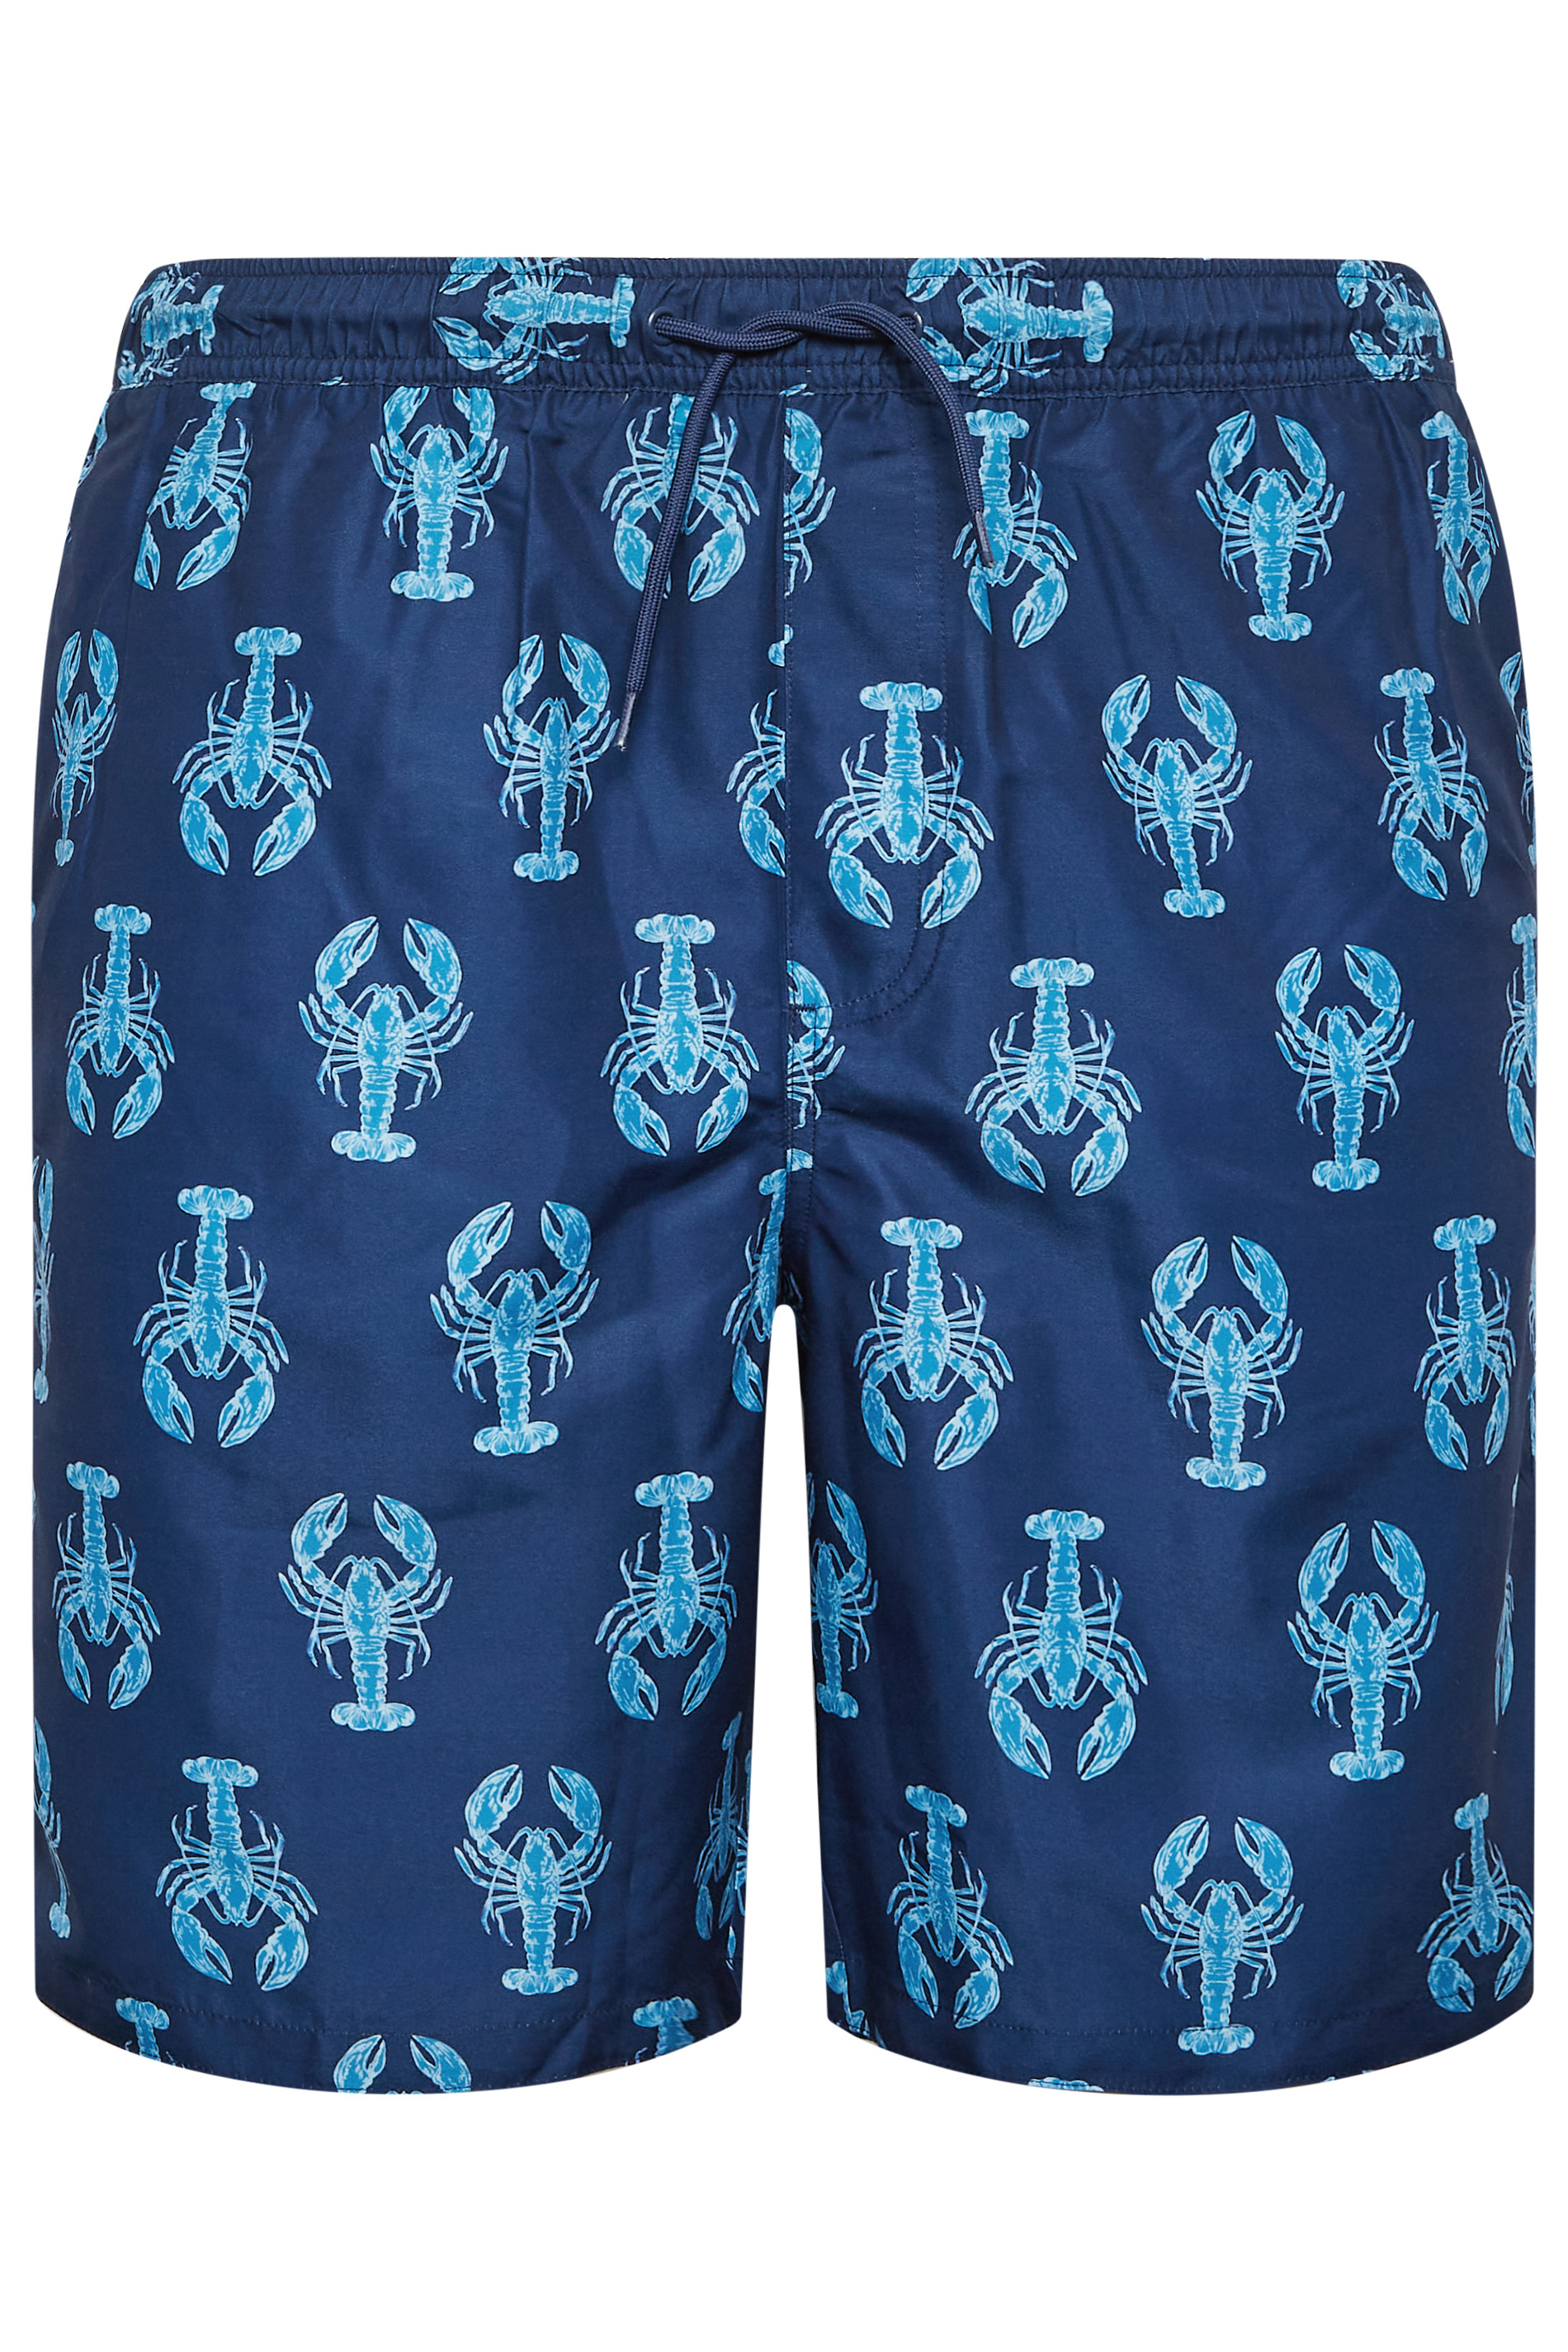 BadRhino Big & Tall Navy Blue Lobster Print Swim Shorts | BadRhino